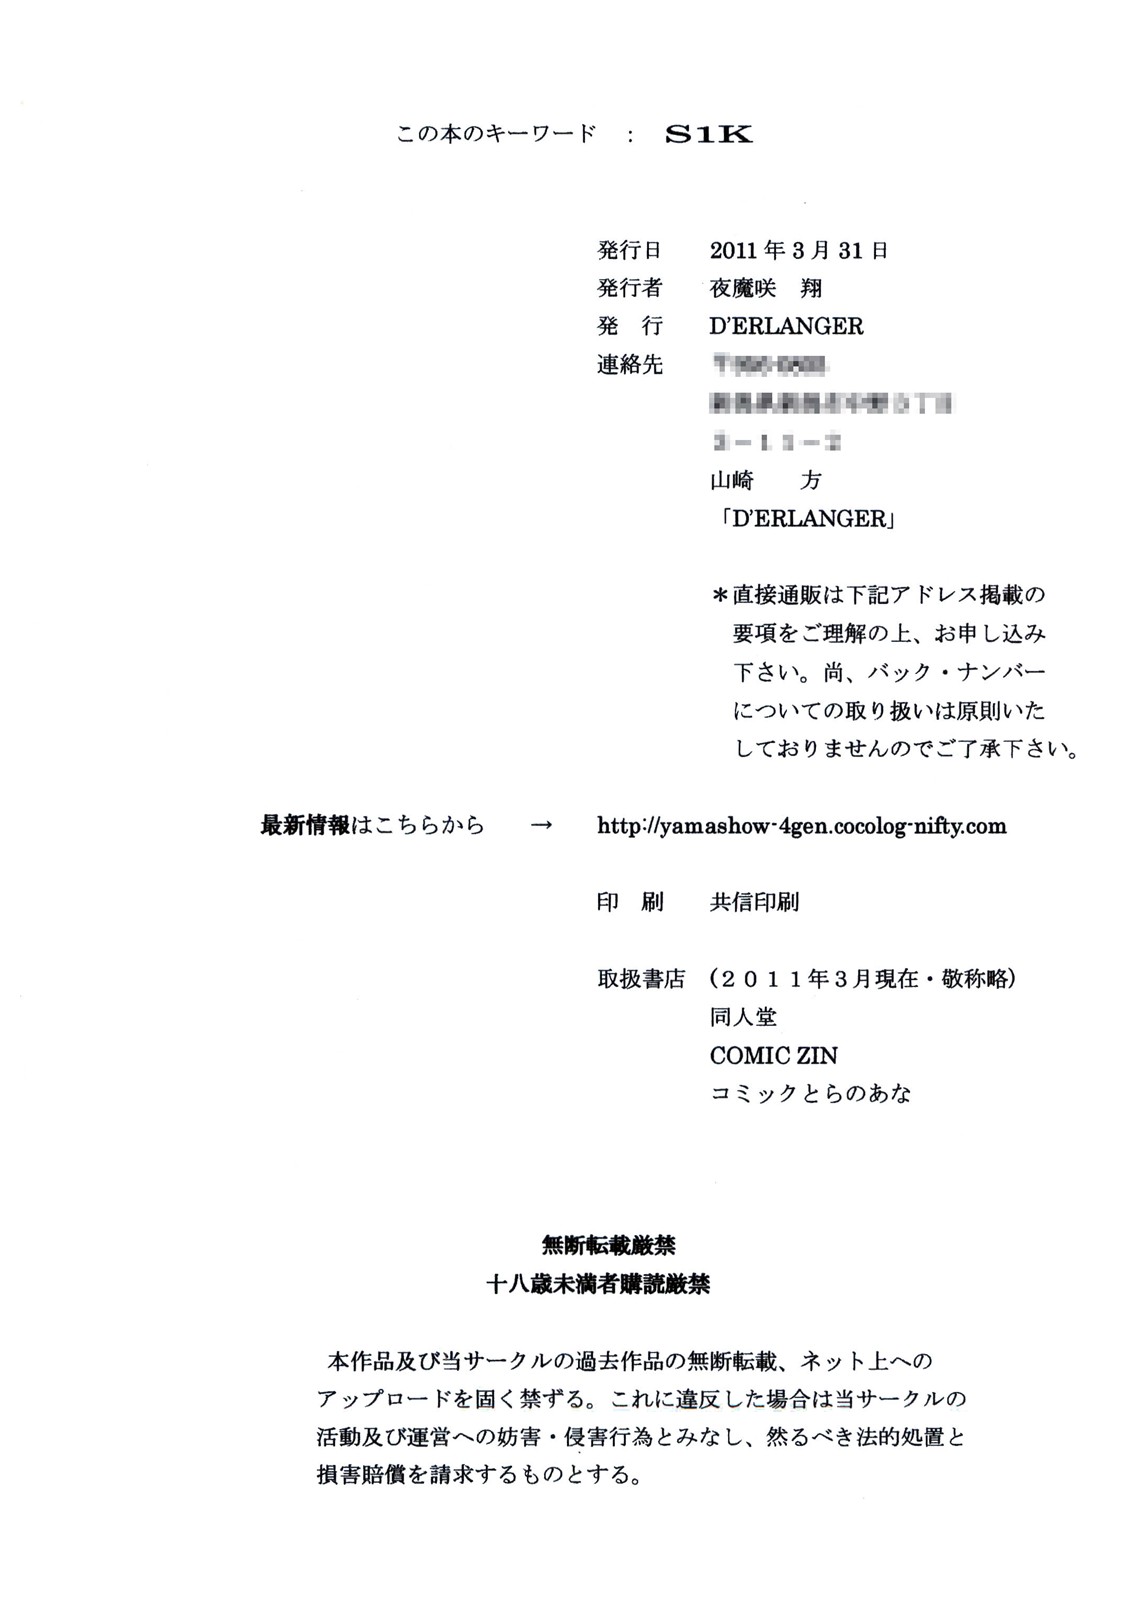 [D'ERLANGER (夜魔咲翔)] SEITAI-KEN VOLUME：1